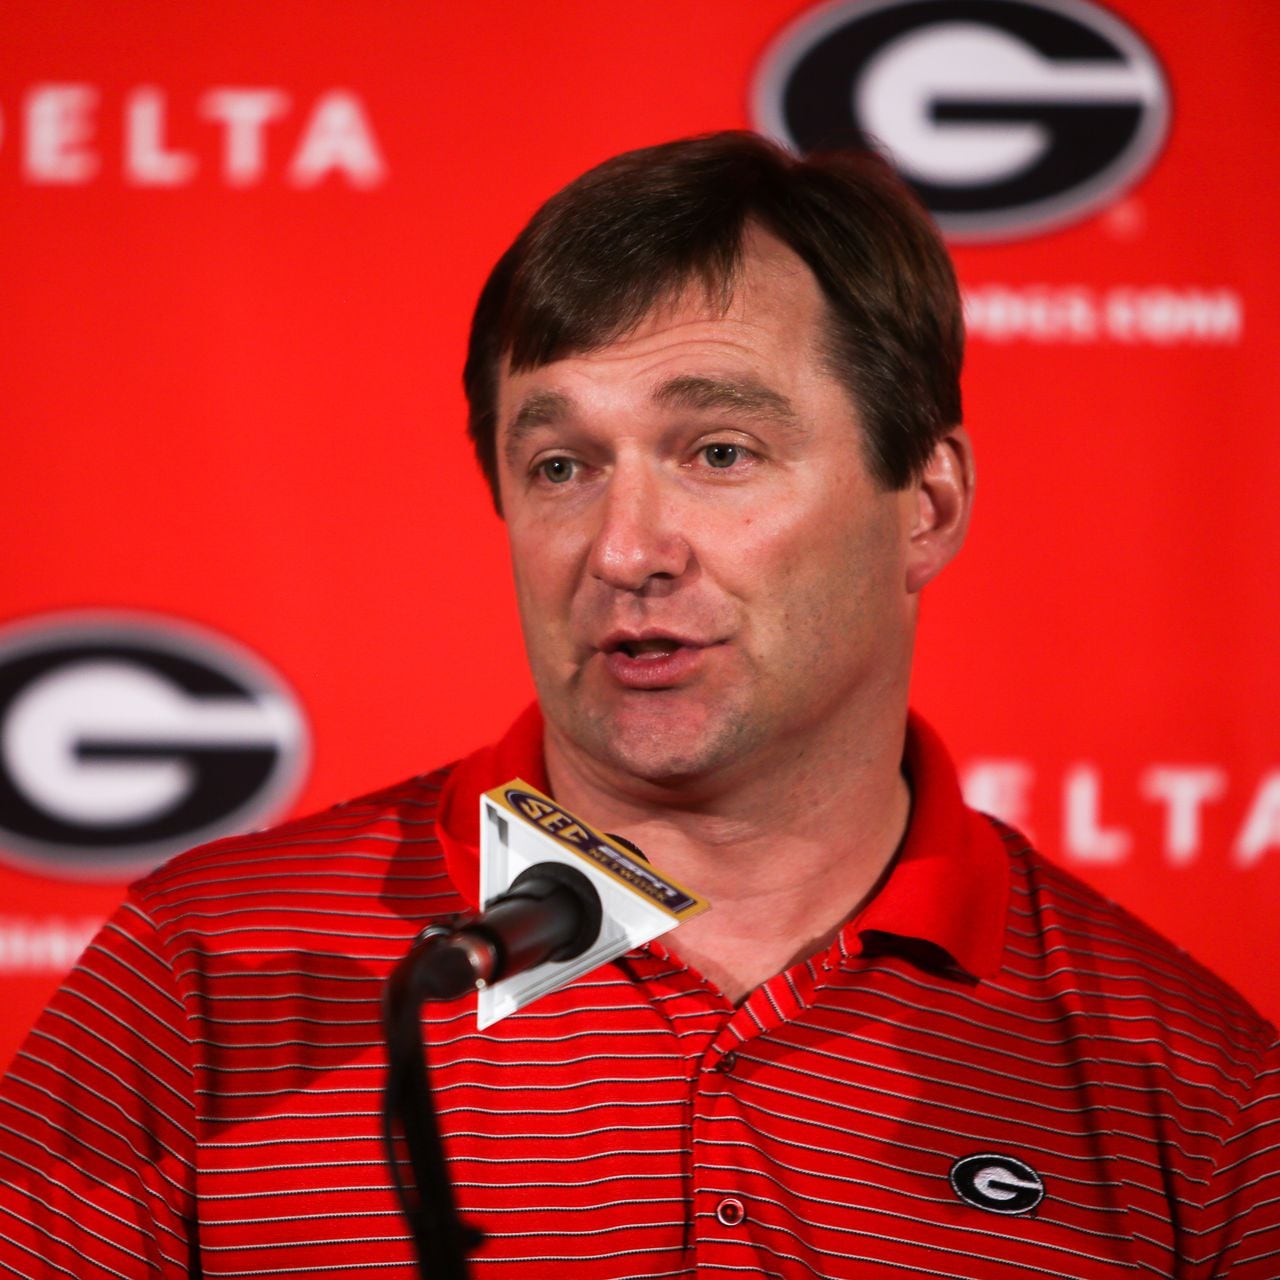 Georgia head coach Kirby Smart admits program hasn't 'solved' issue of  speeding